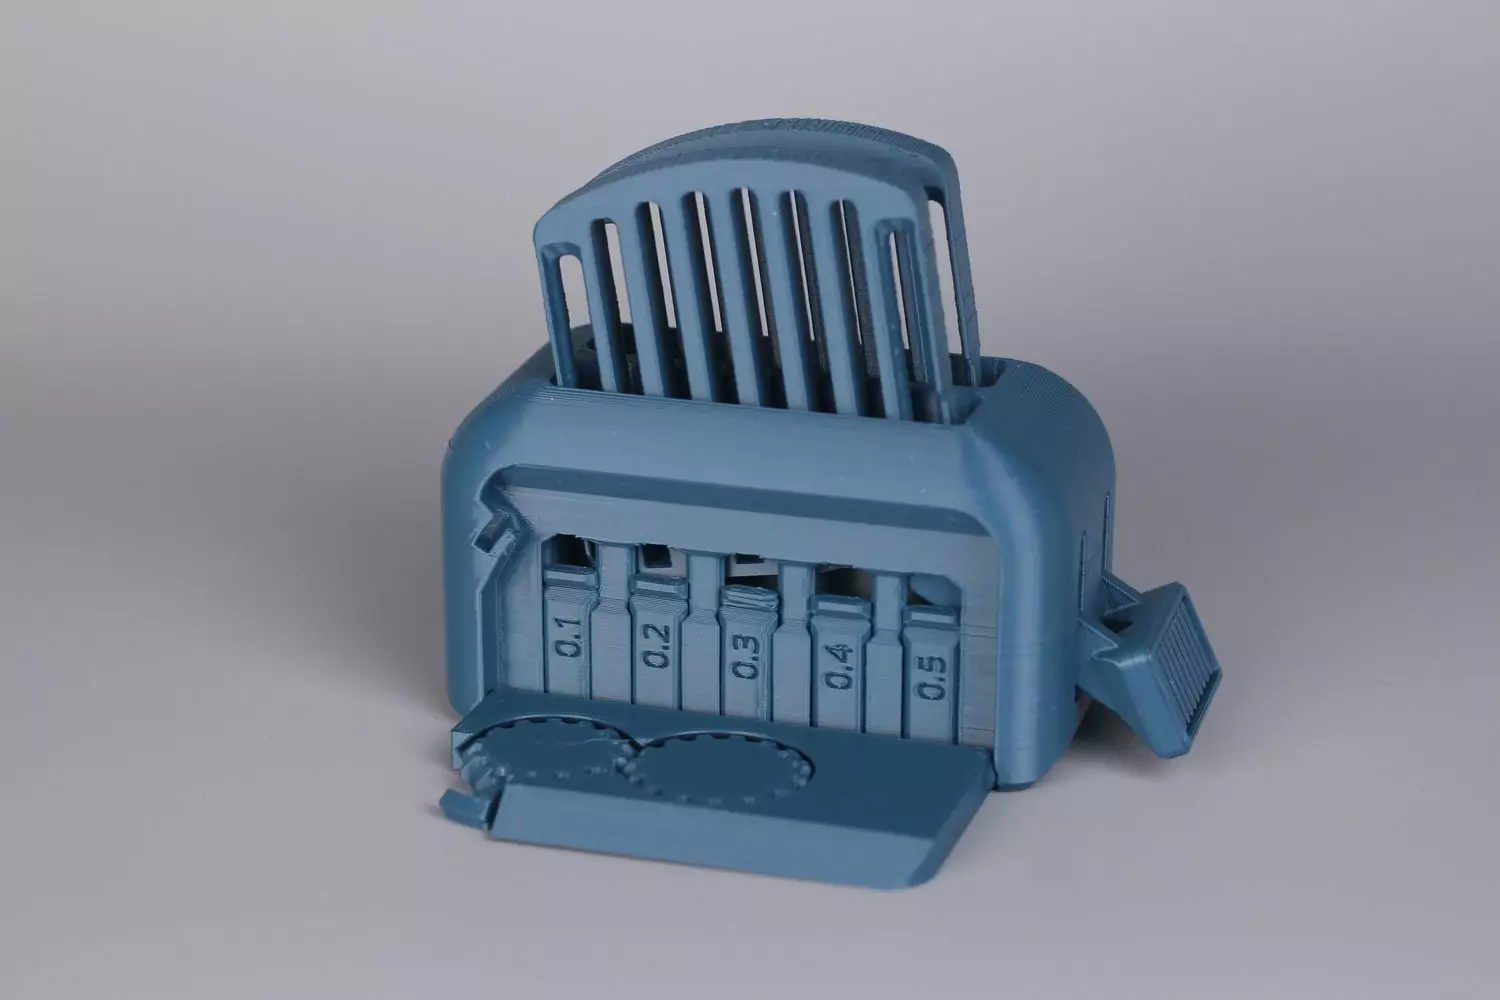 Torture Toaster calibration test on BIQU Hurakan2 | BIQU Hurakan Review: Klipper Firmware on a Budget